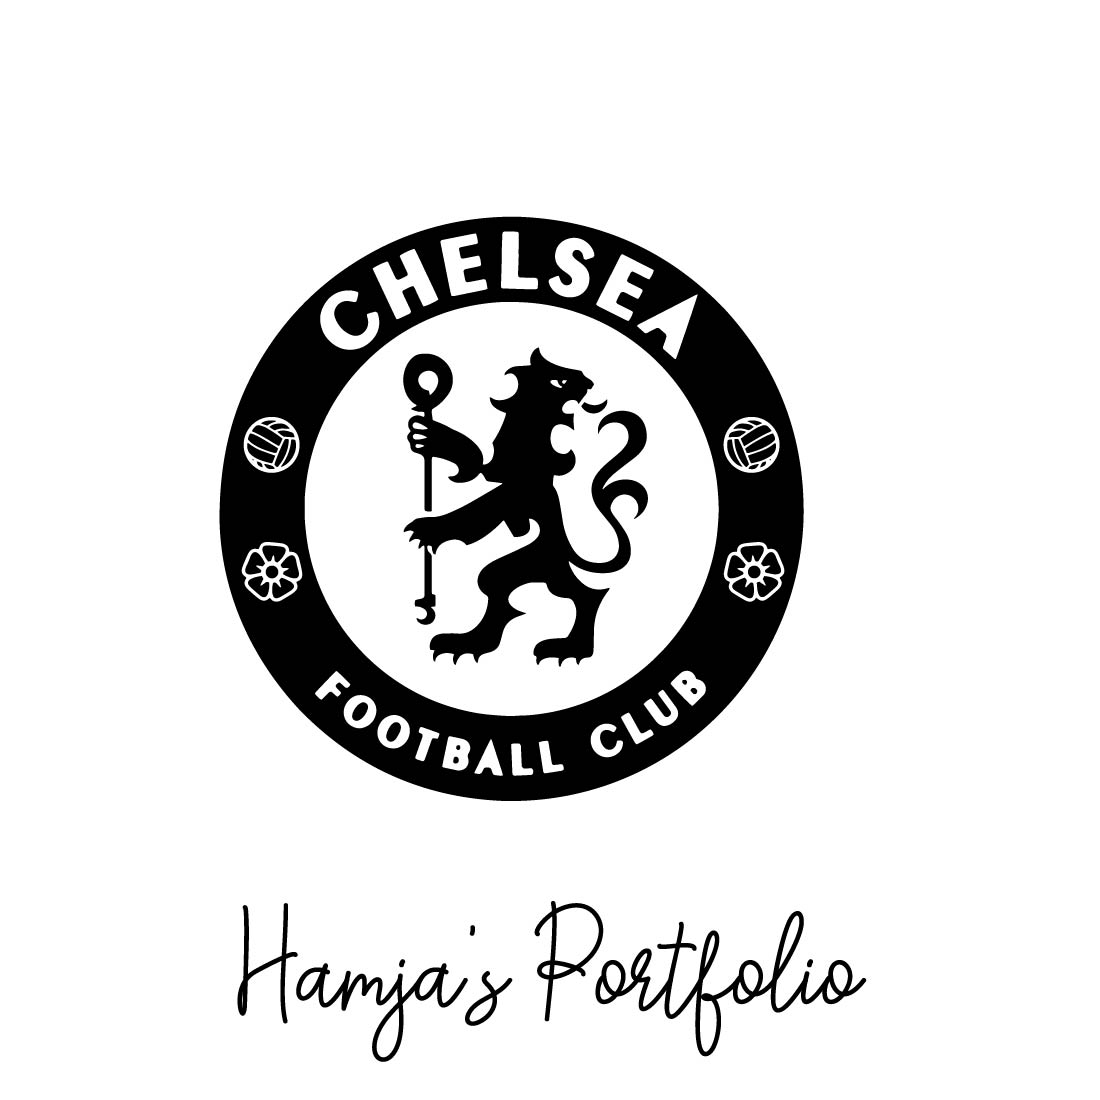 Chelsea Fc Logo: Over 39 Royalty-Free Licensable Stock Vectors & Vector Art  | Shutterstock